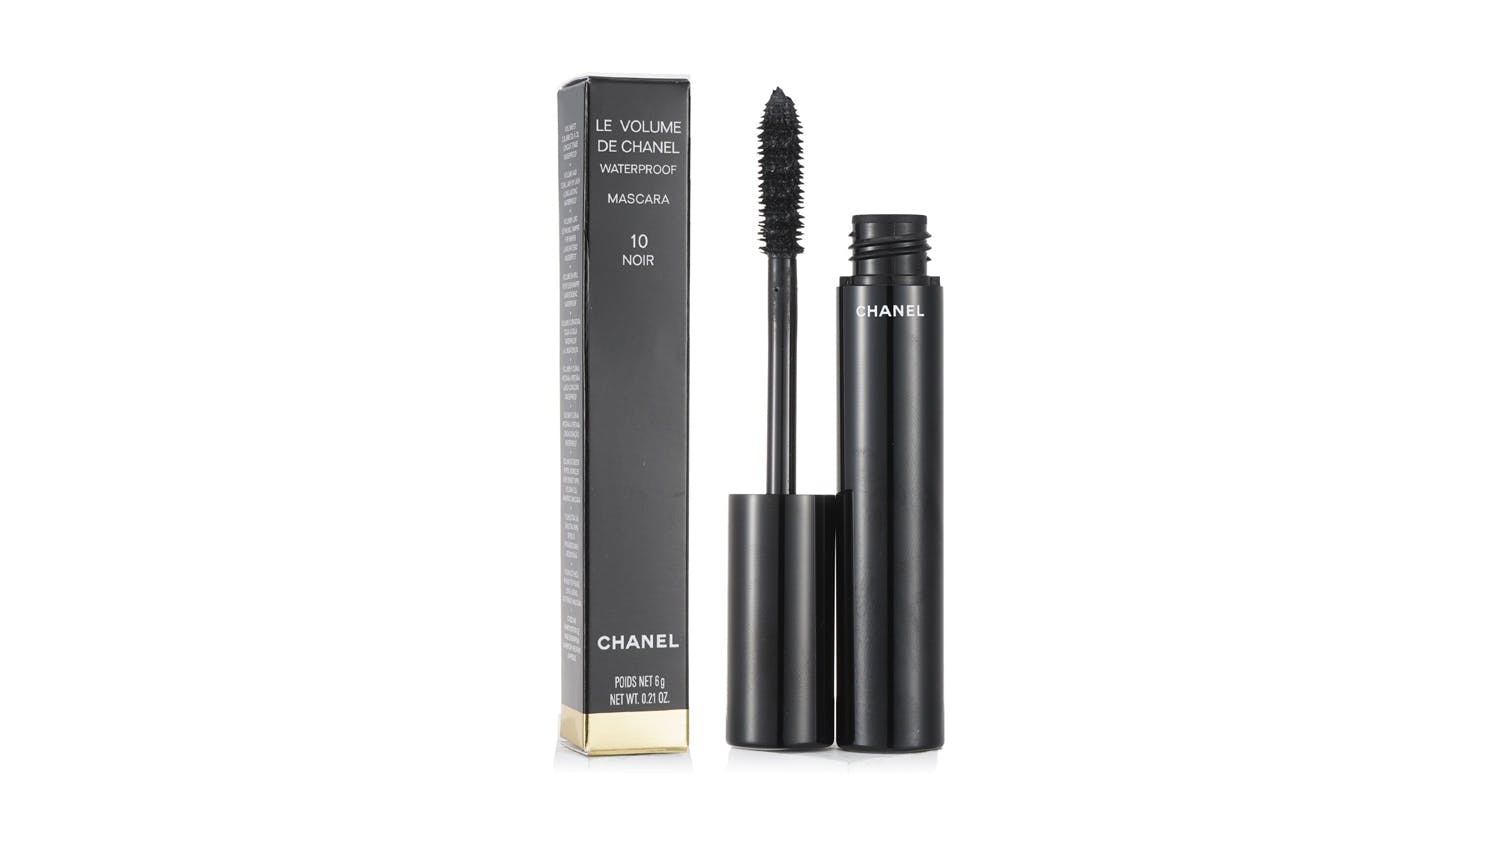 Chanel Le Volume De Chanel Waterproof Mascara - # 10 Noir - 6g/0.21oz